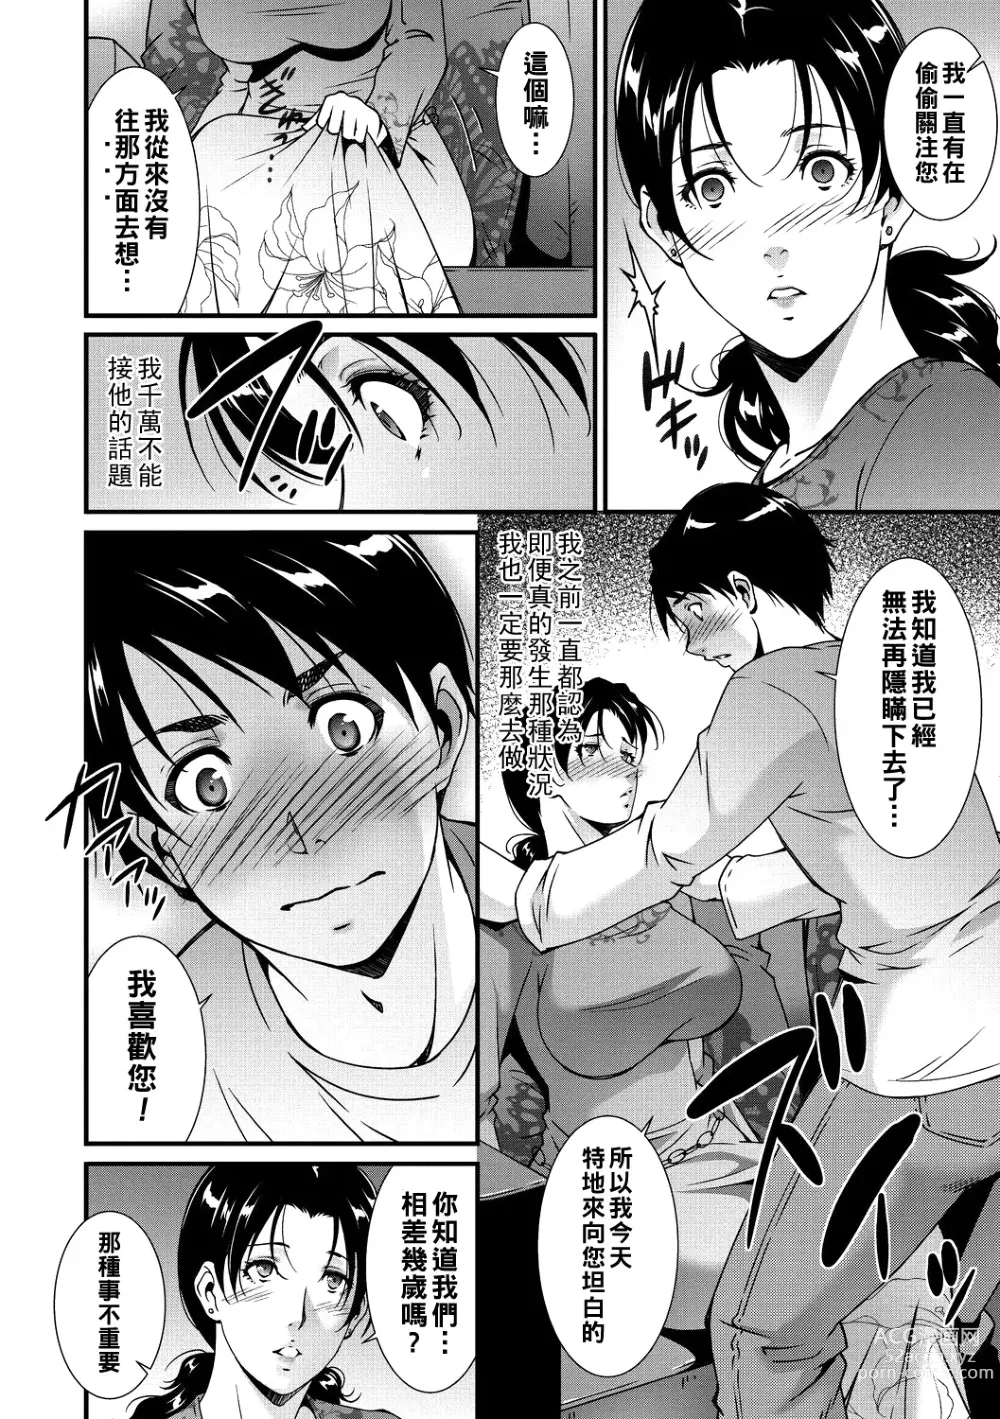 Page 4 of manga Jukubo no Enjou